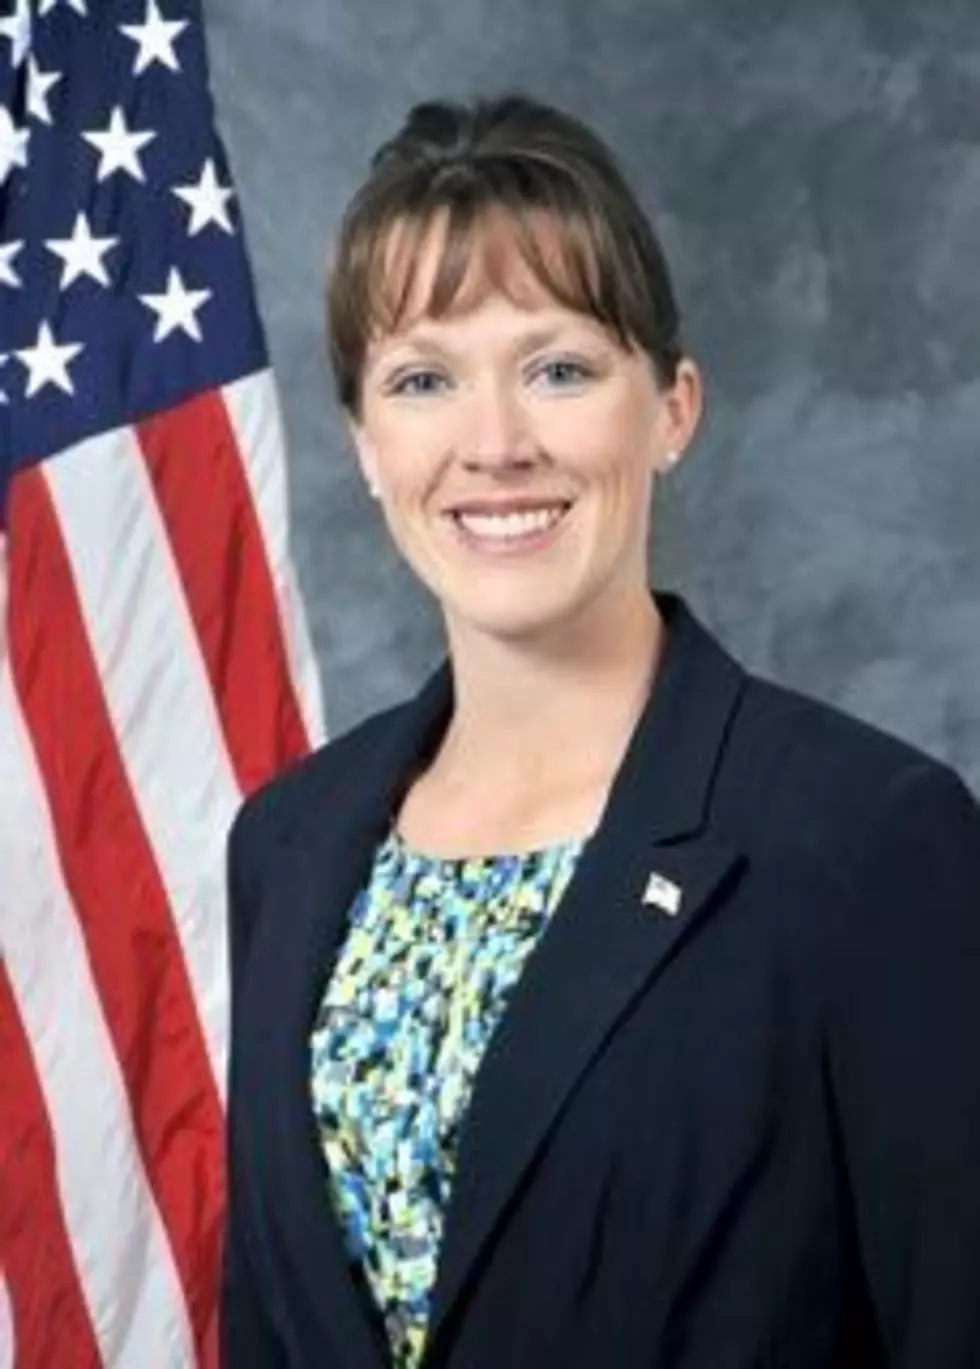 Idaho Rep. Priscilla Giddings on KLIX